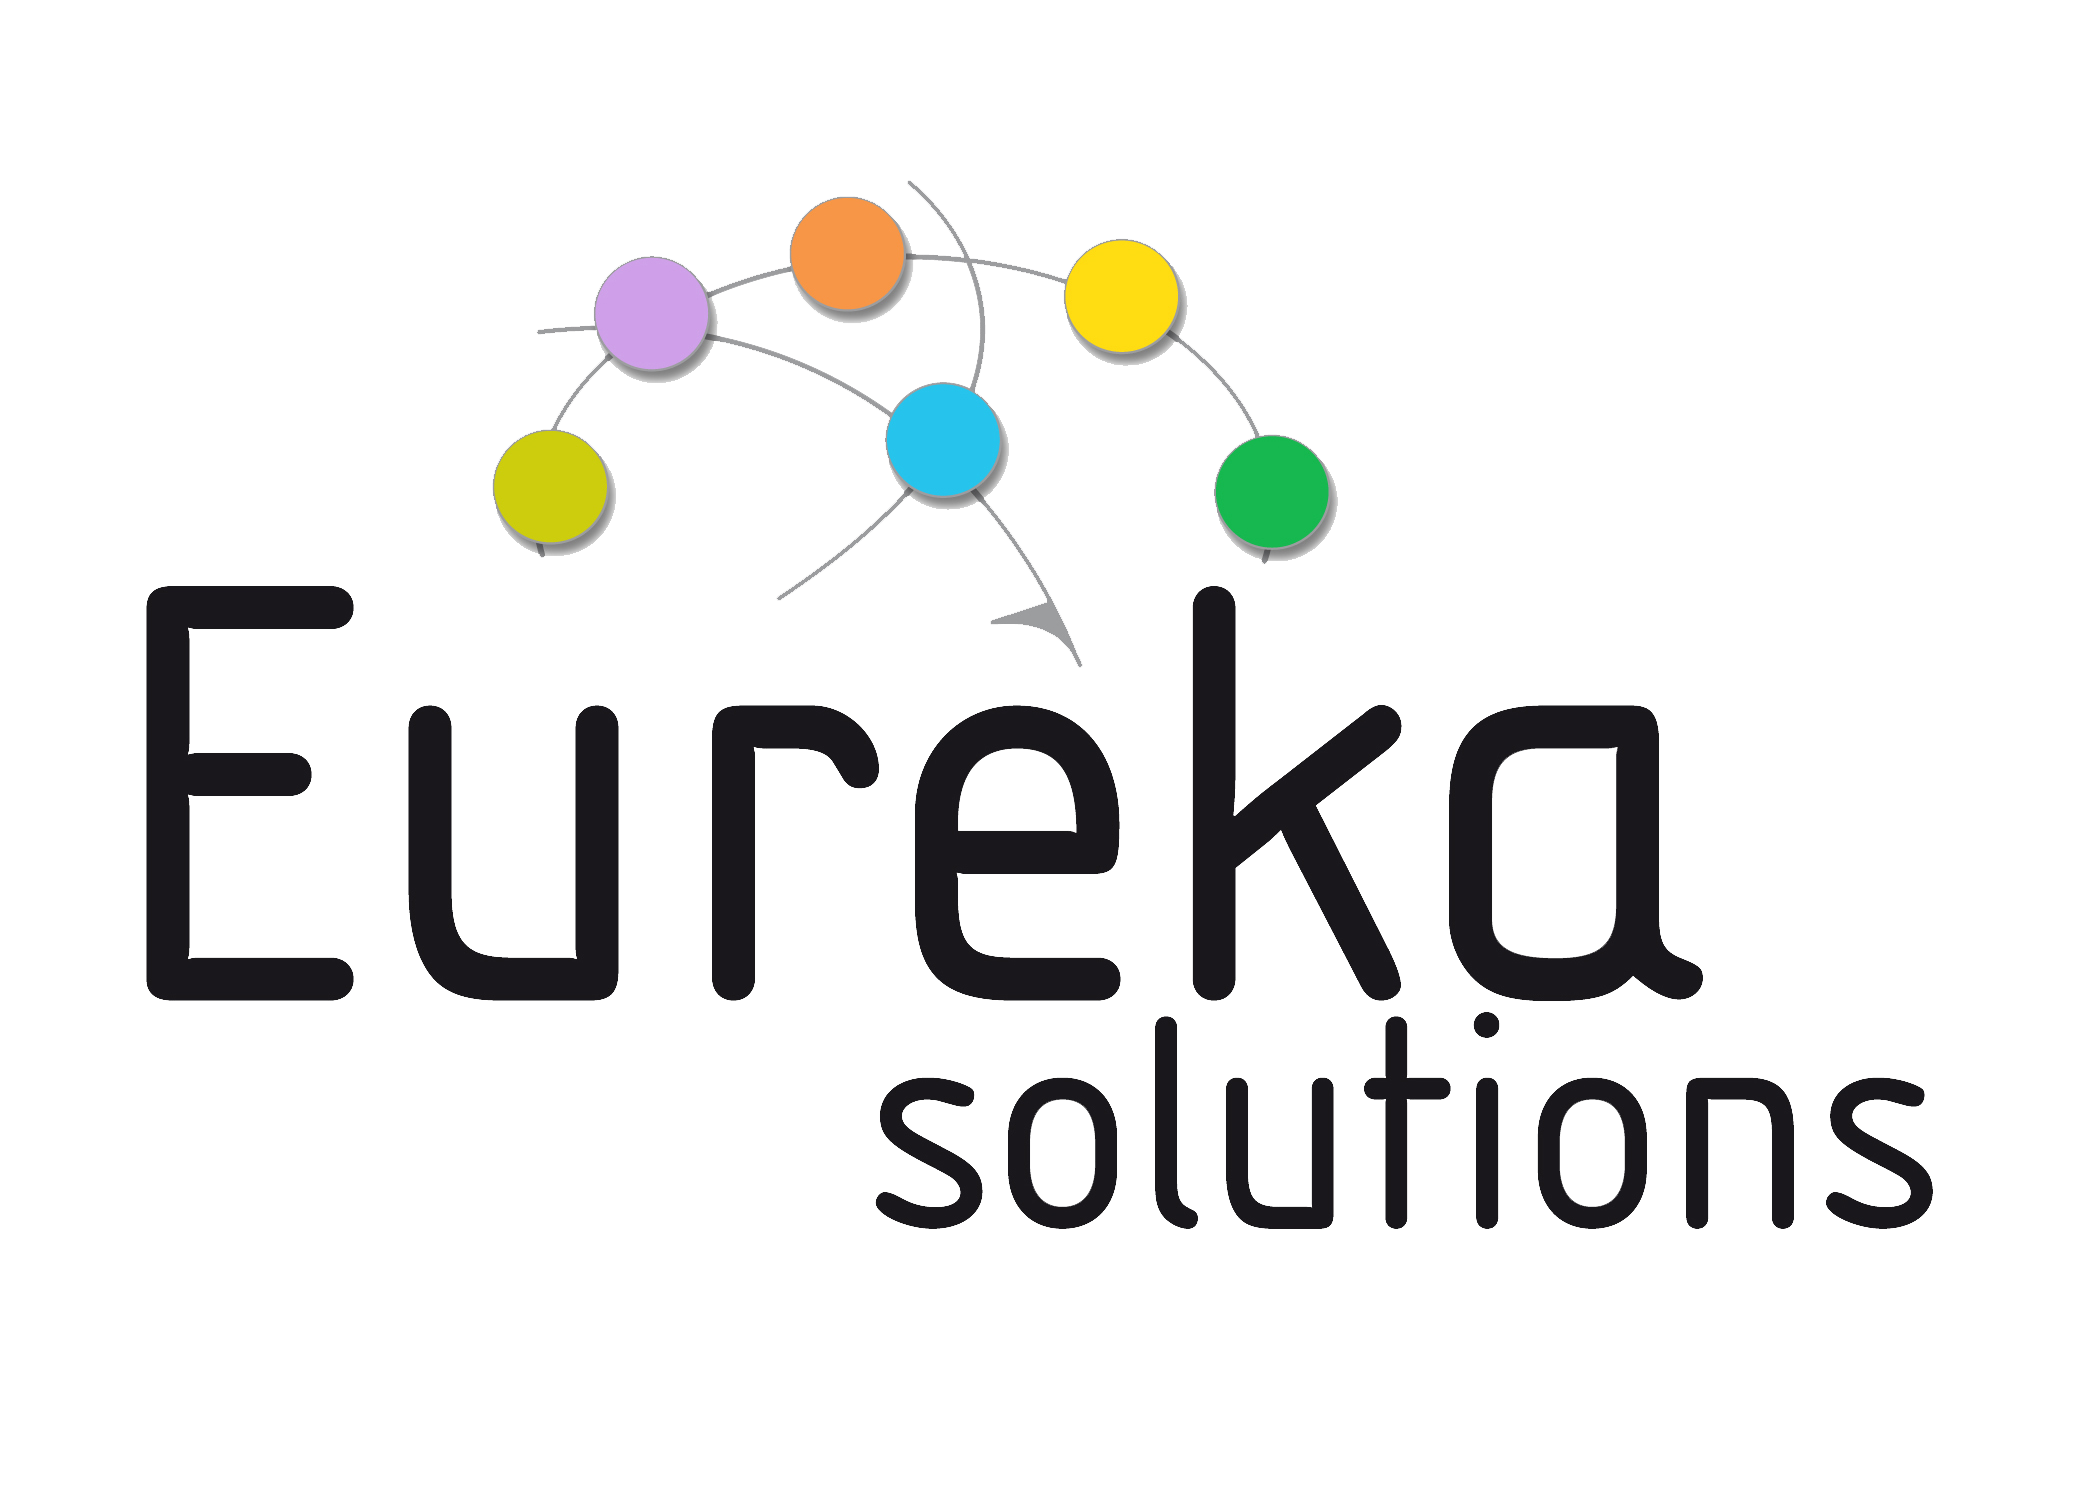 Eurêka Solutions